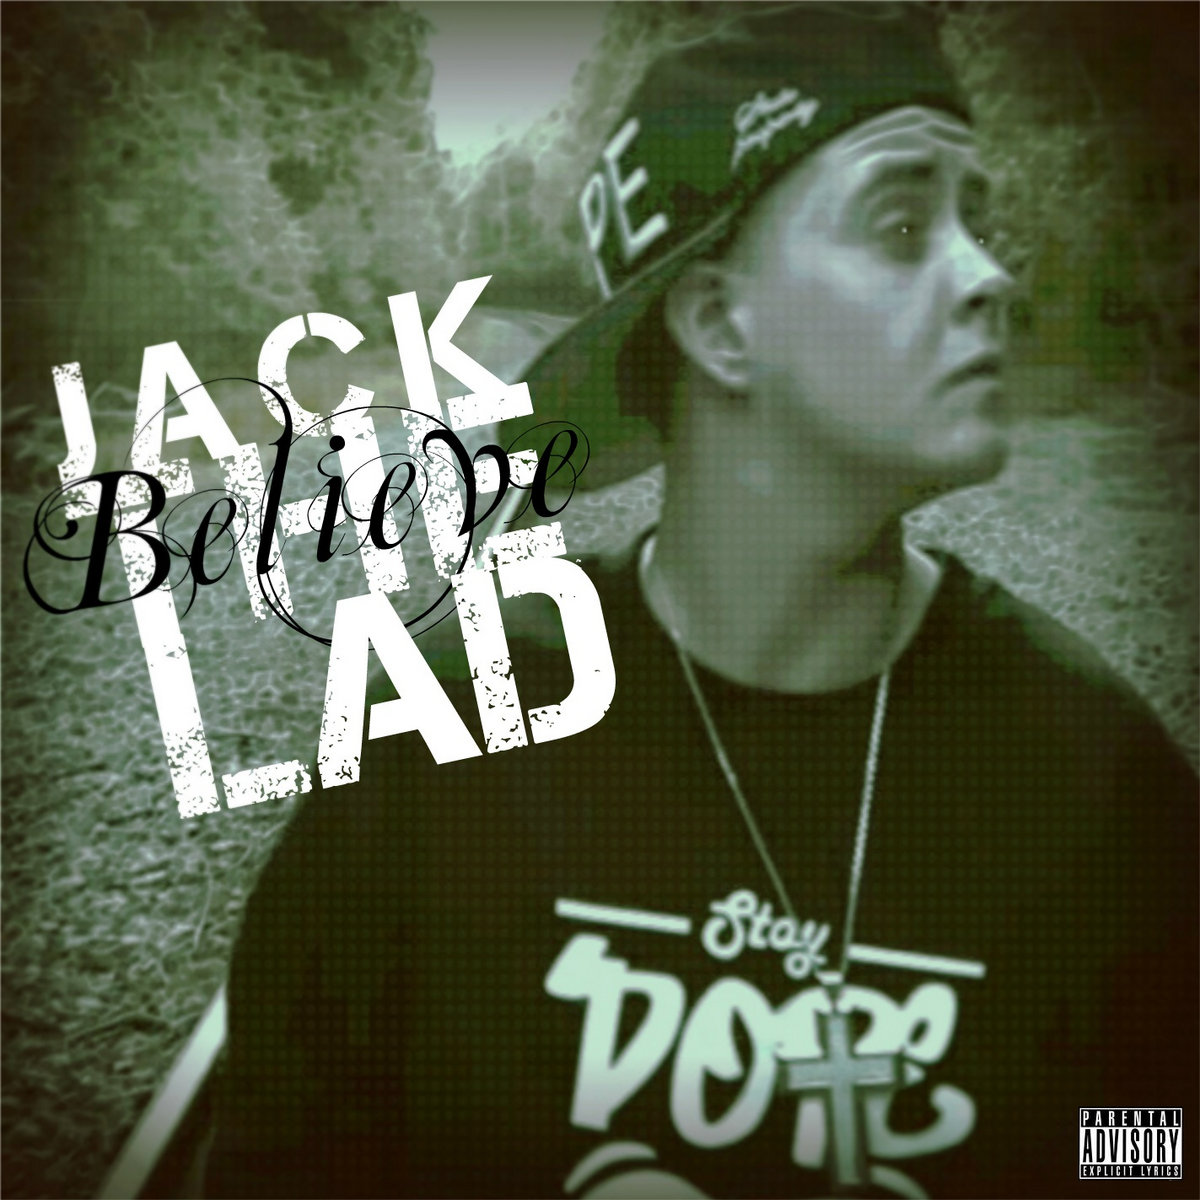 Jack the lad